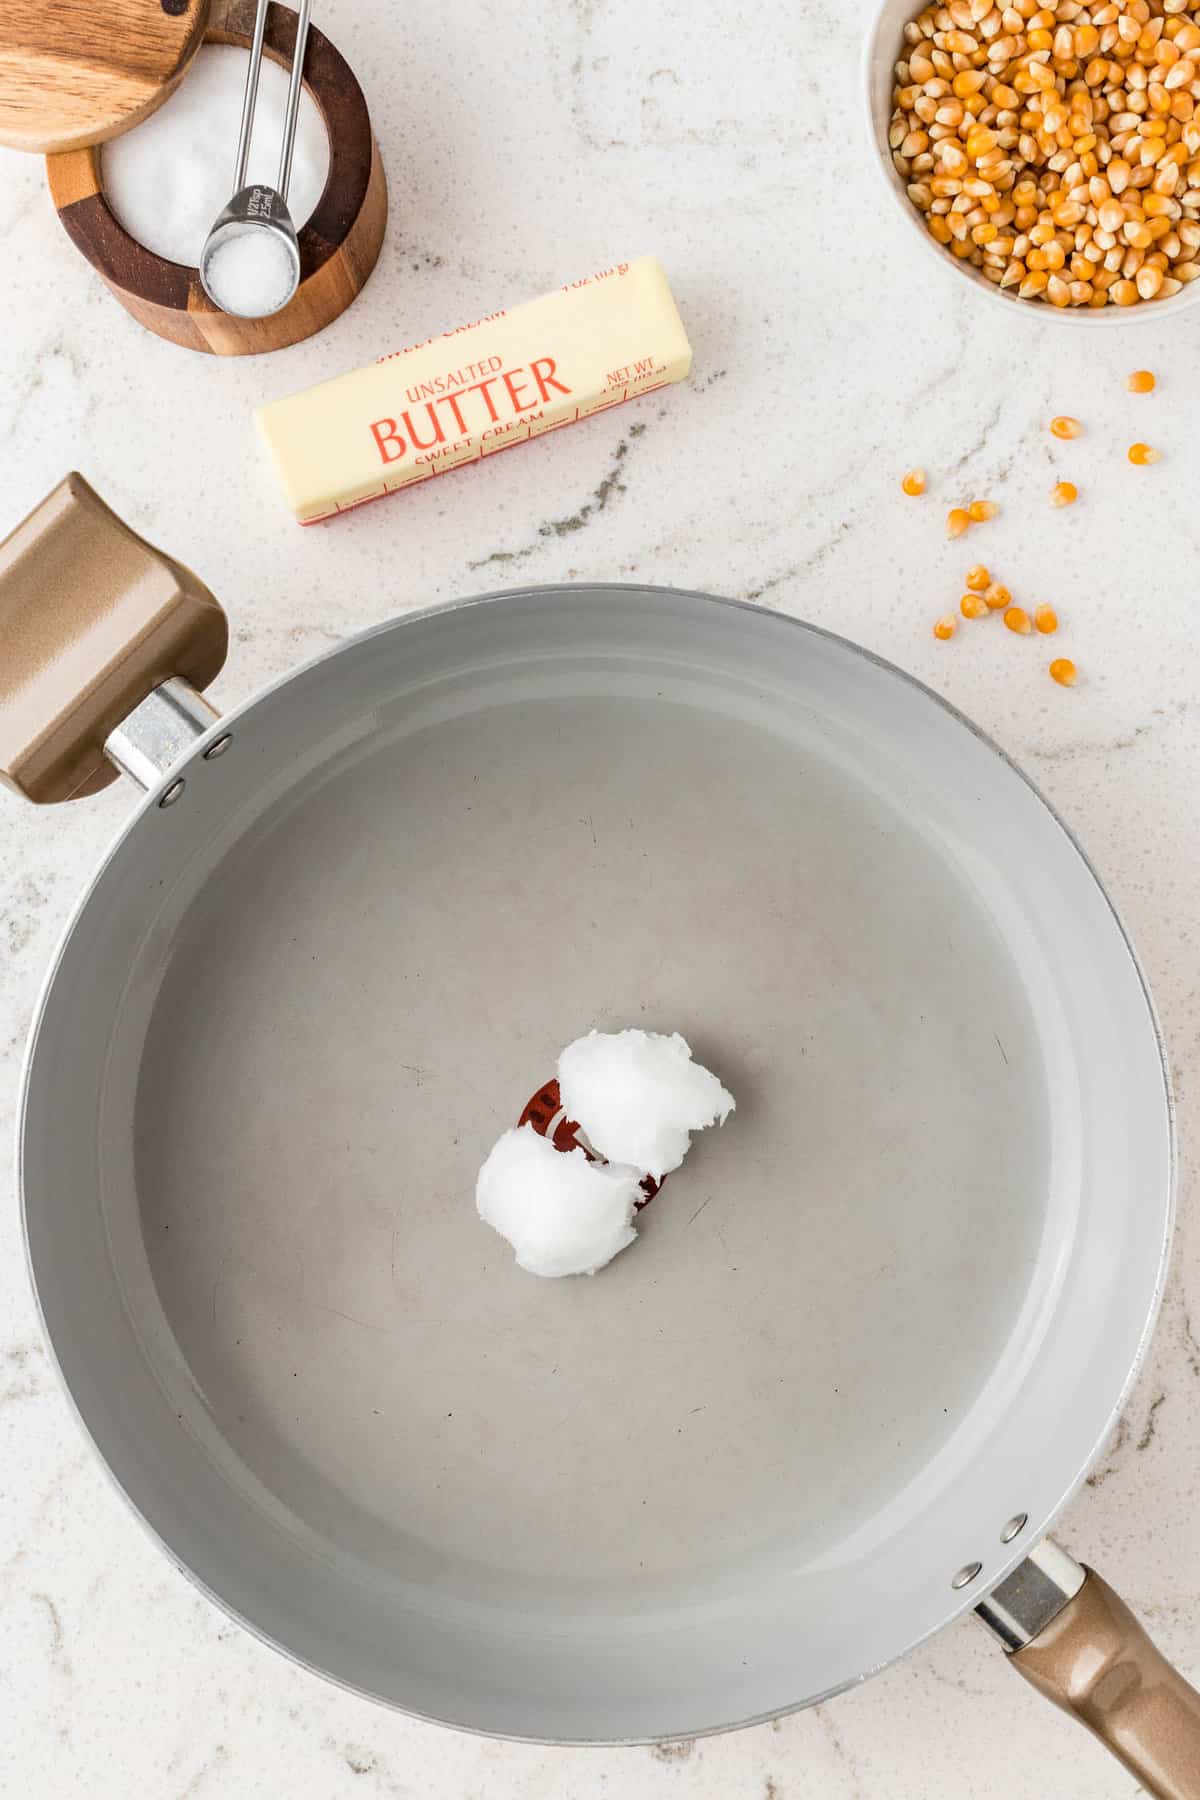 Melting Coconut Oil in Stovetop Pan for Homemade Popcorn